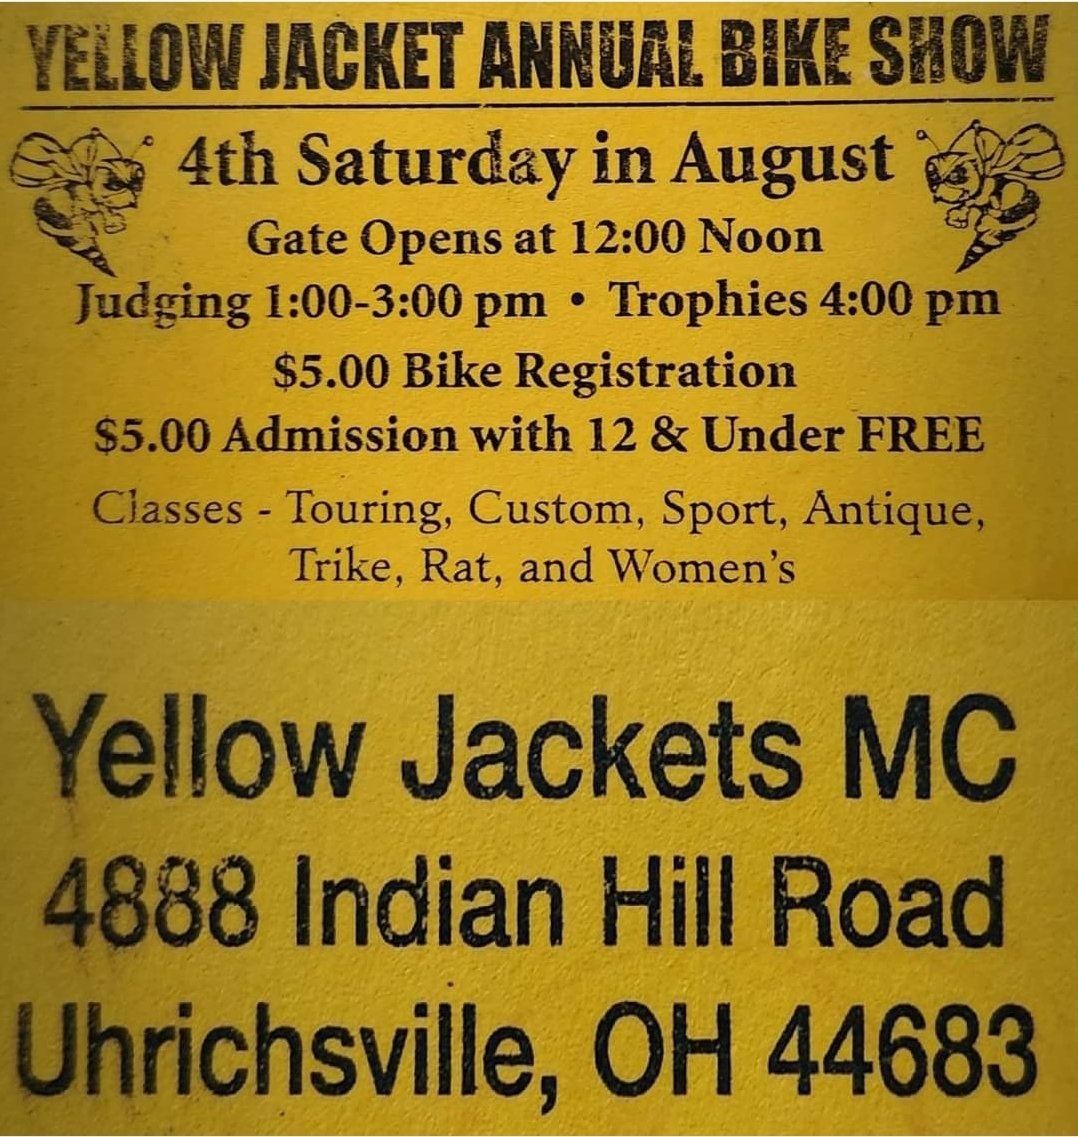 Yellow Jacket Annual Bike Show 4th Saturday in August in Uhrichsville, OH
#bikeshow #motorcycleshow #biker #motorcycle #motorcyclelifestyle #motorcyclist #motolife #bikerbabe #bikerlife #harleydavidson #indianmotorcycle #ohio